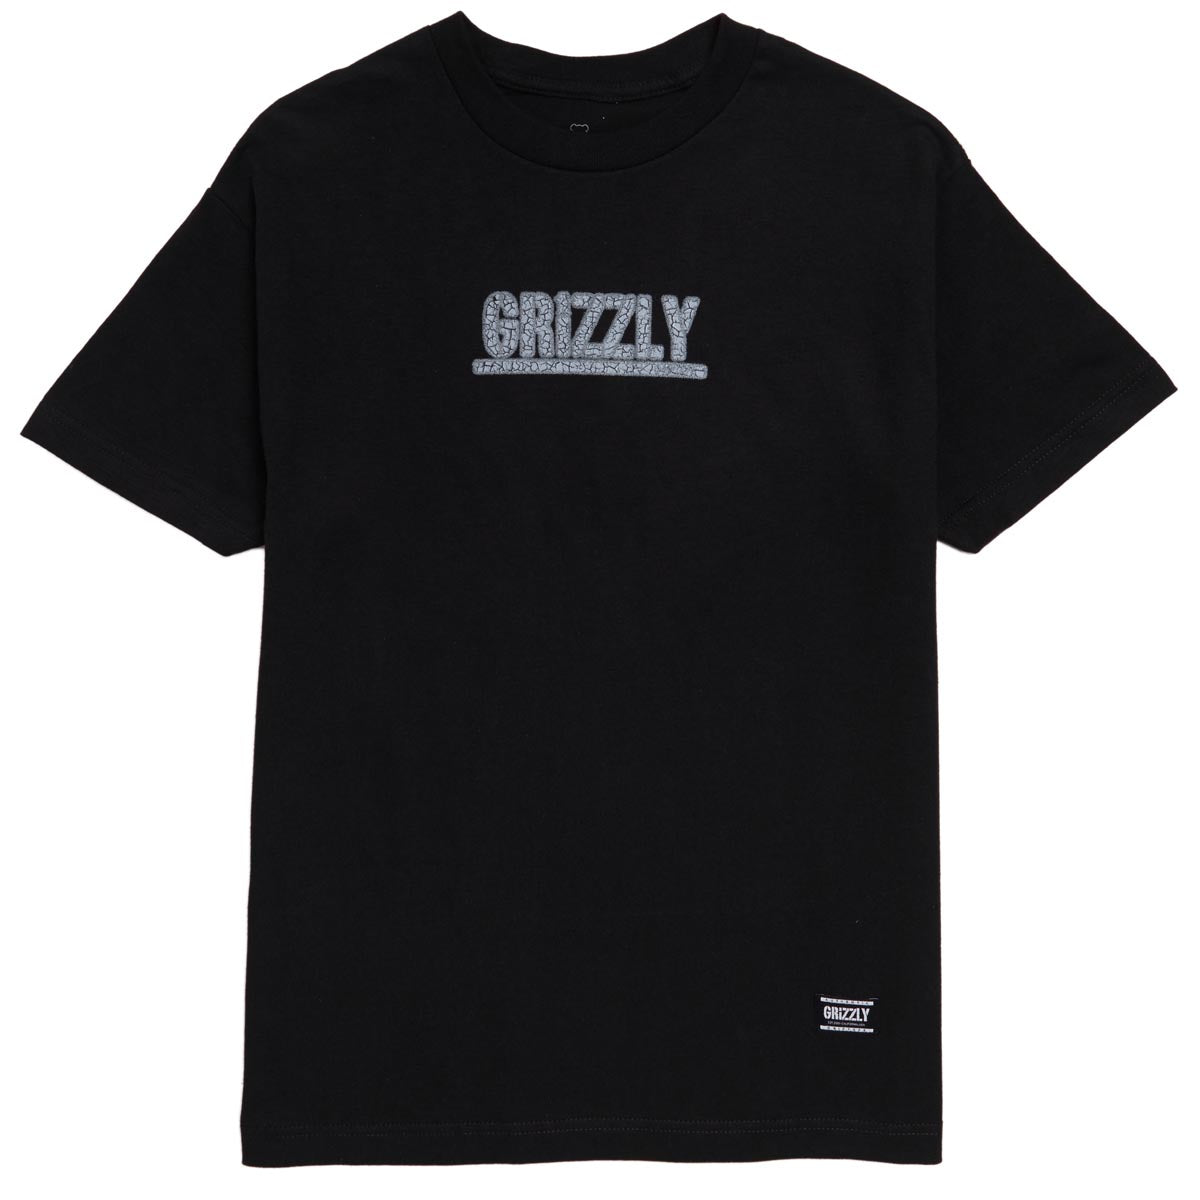 Grizzly Asphalt T-Shirt - Black image 1